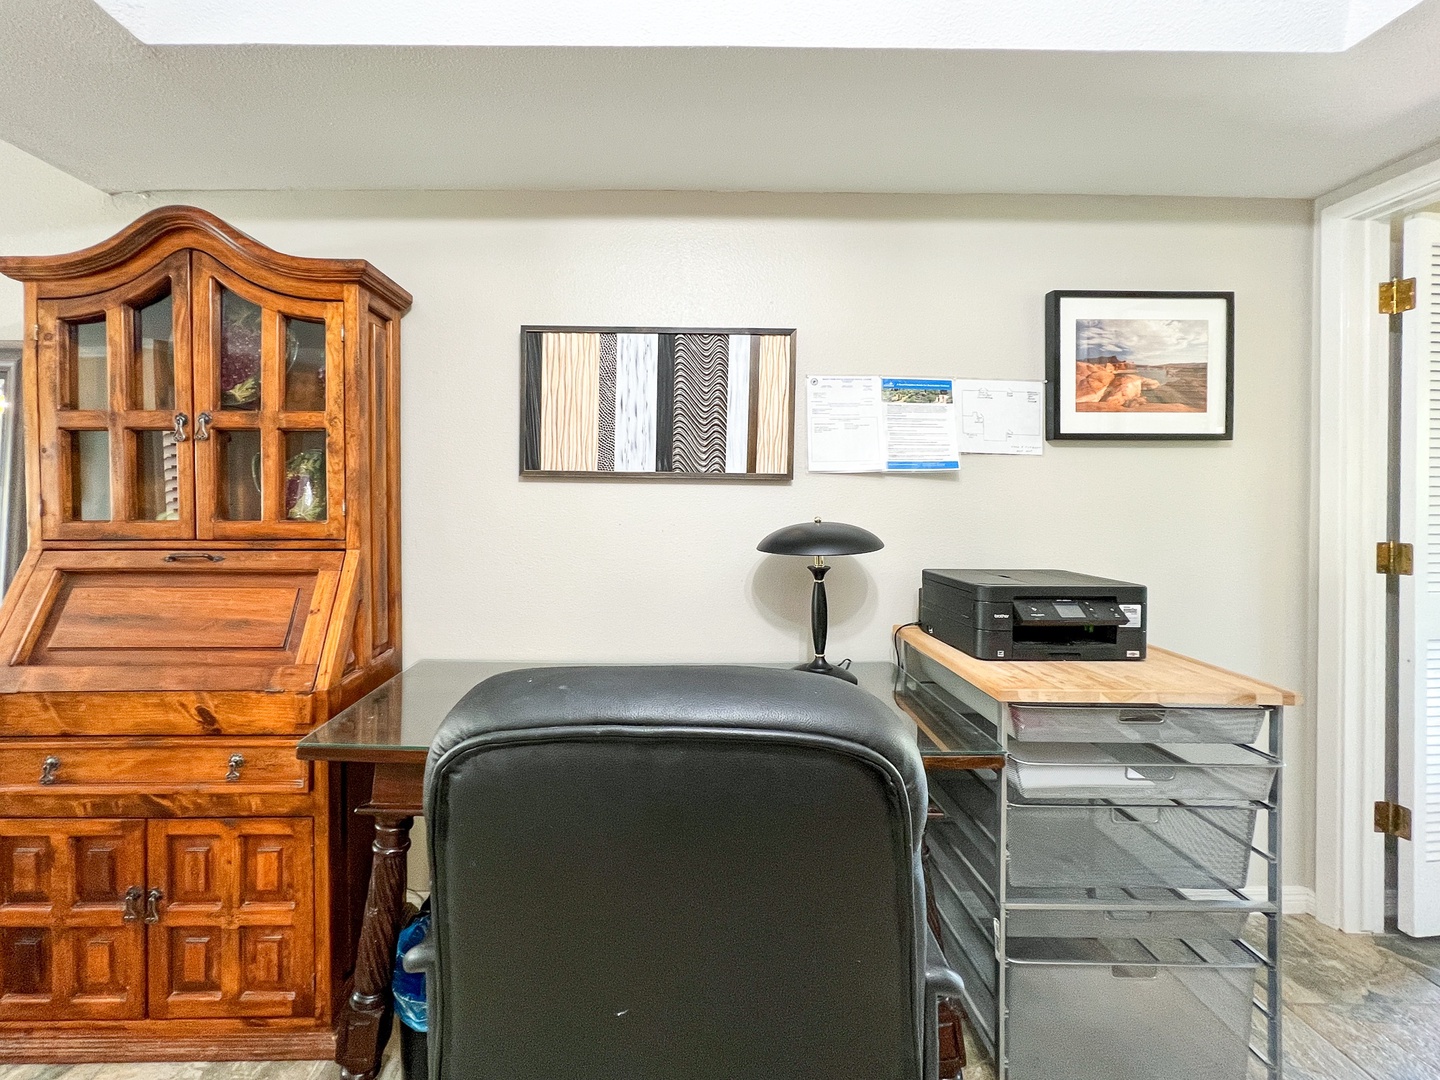 Office has a desk, desk chair, printer